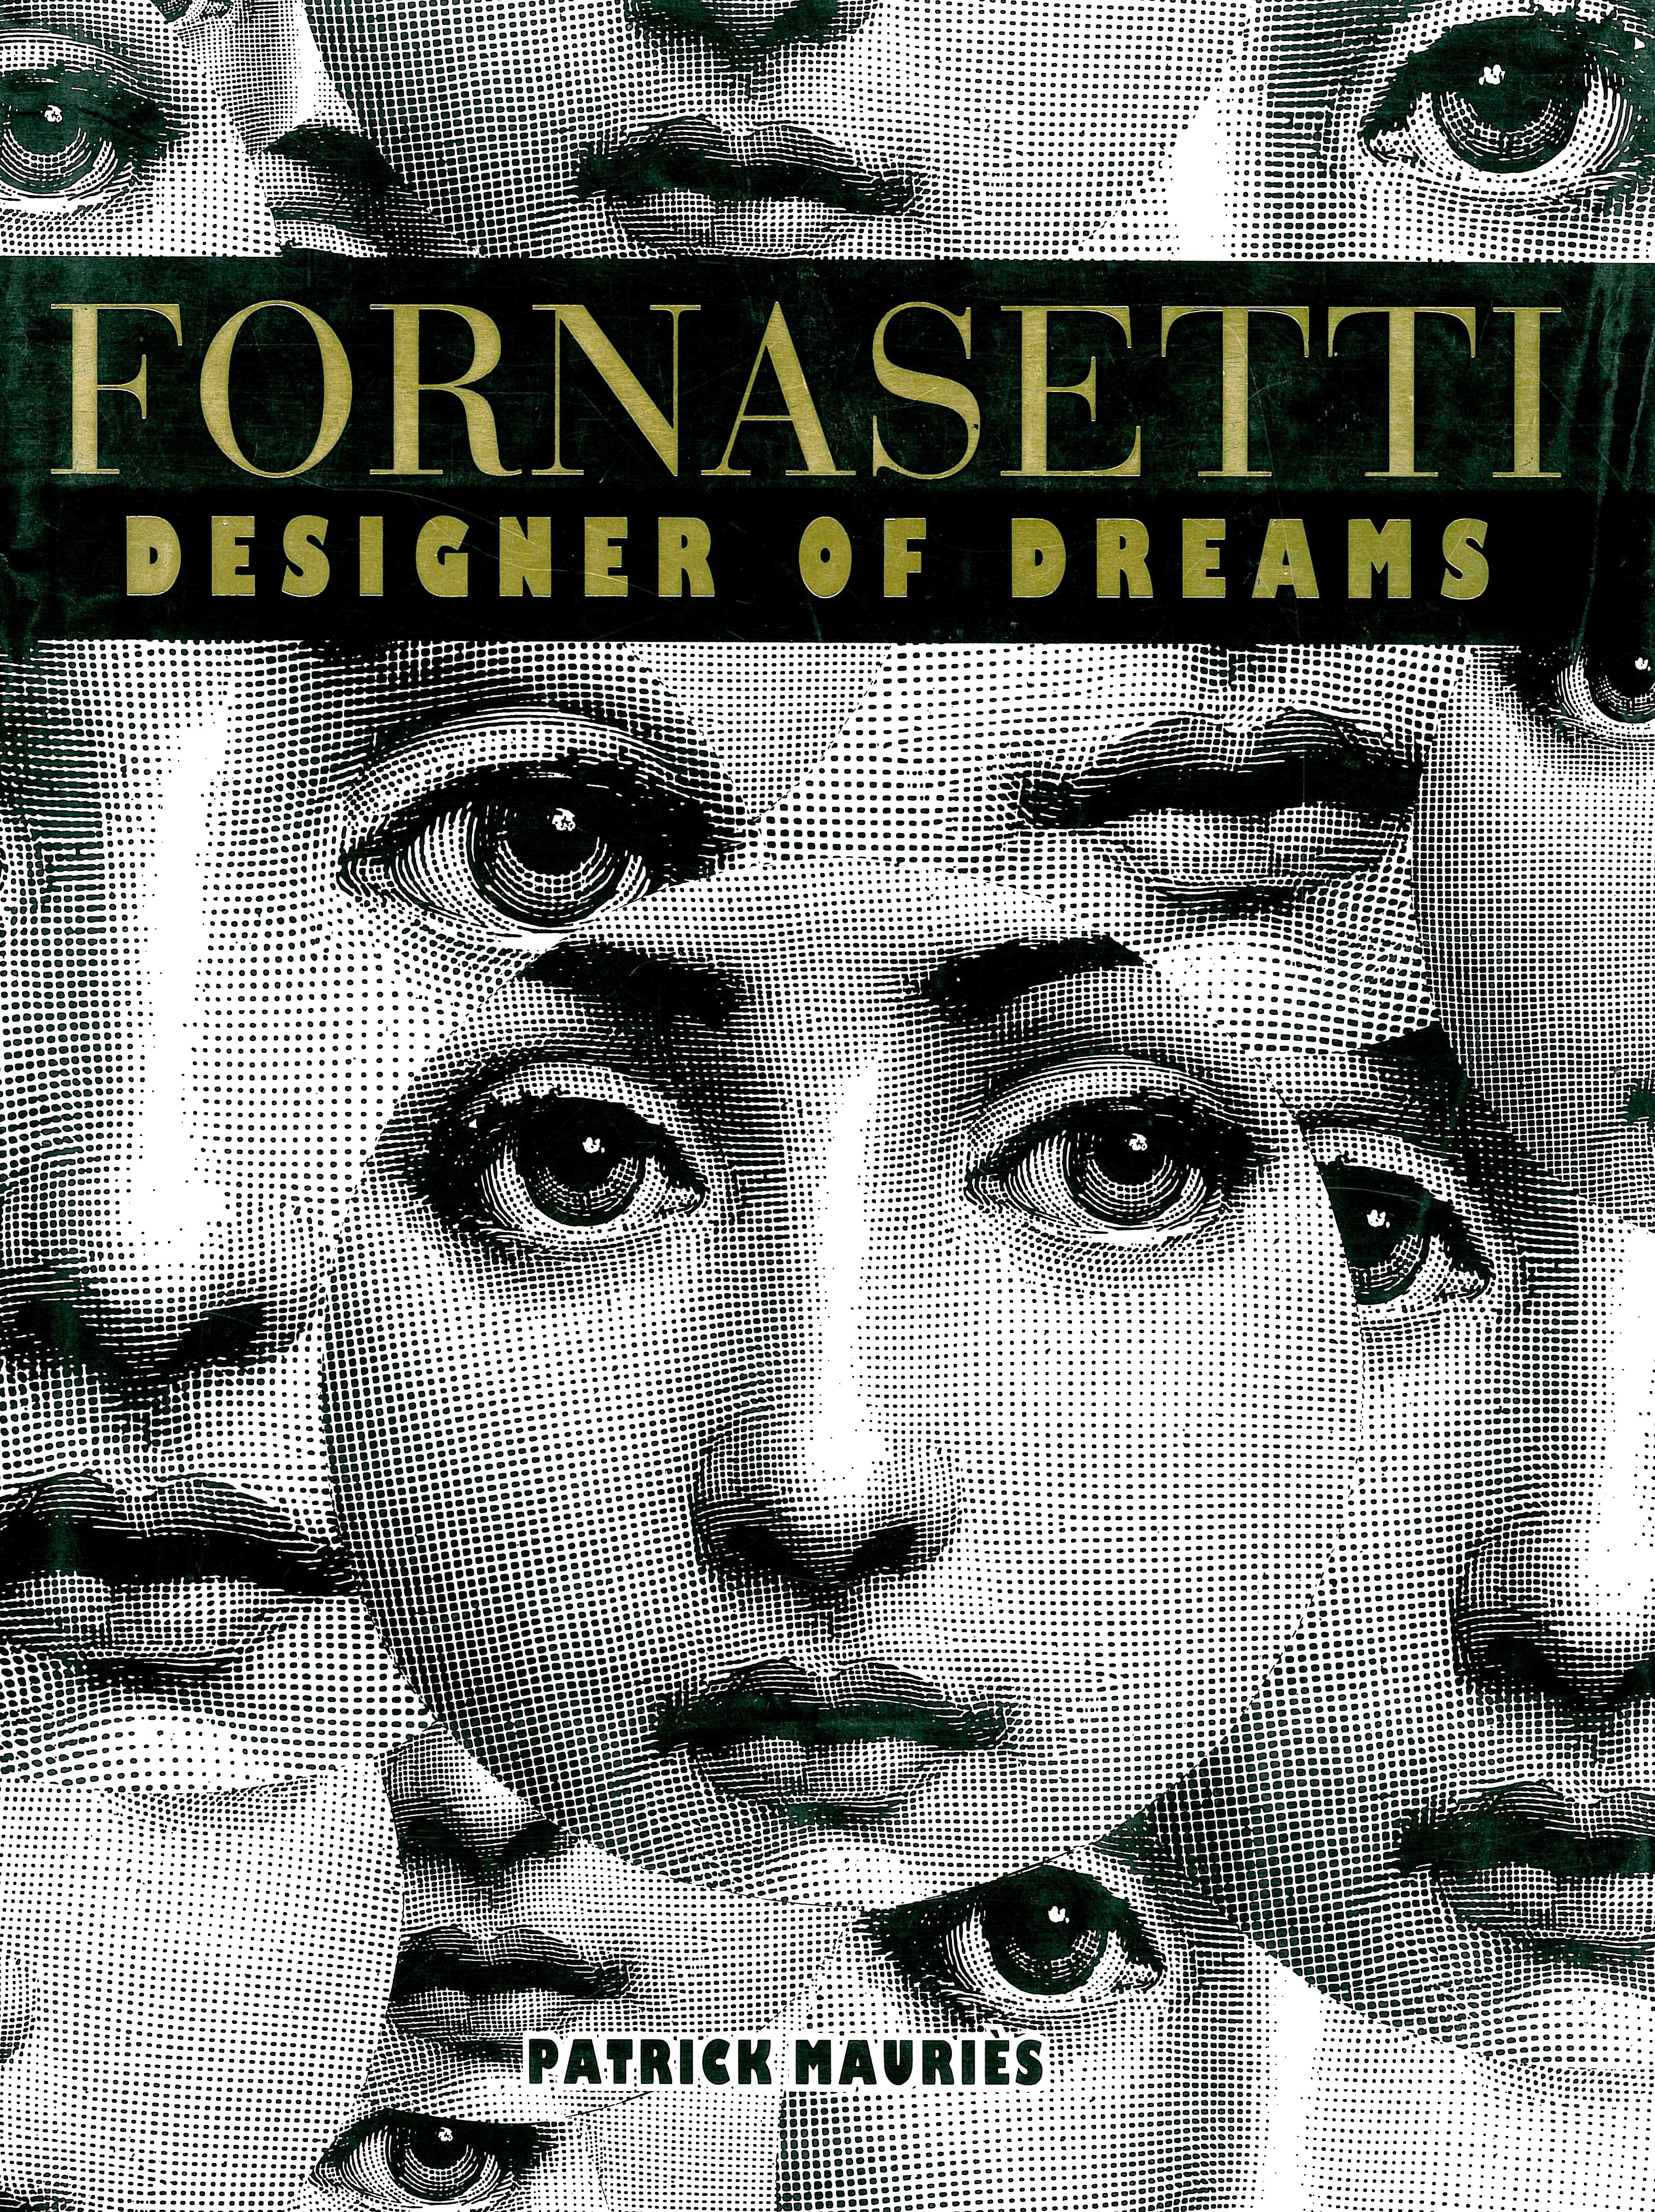 FORNASETTI - Designer of Dreams (books)